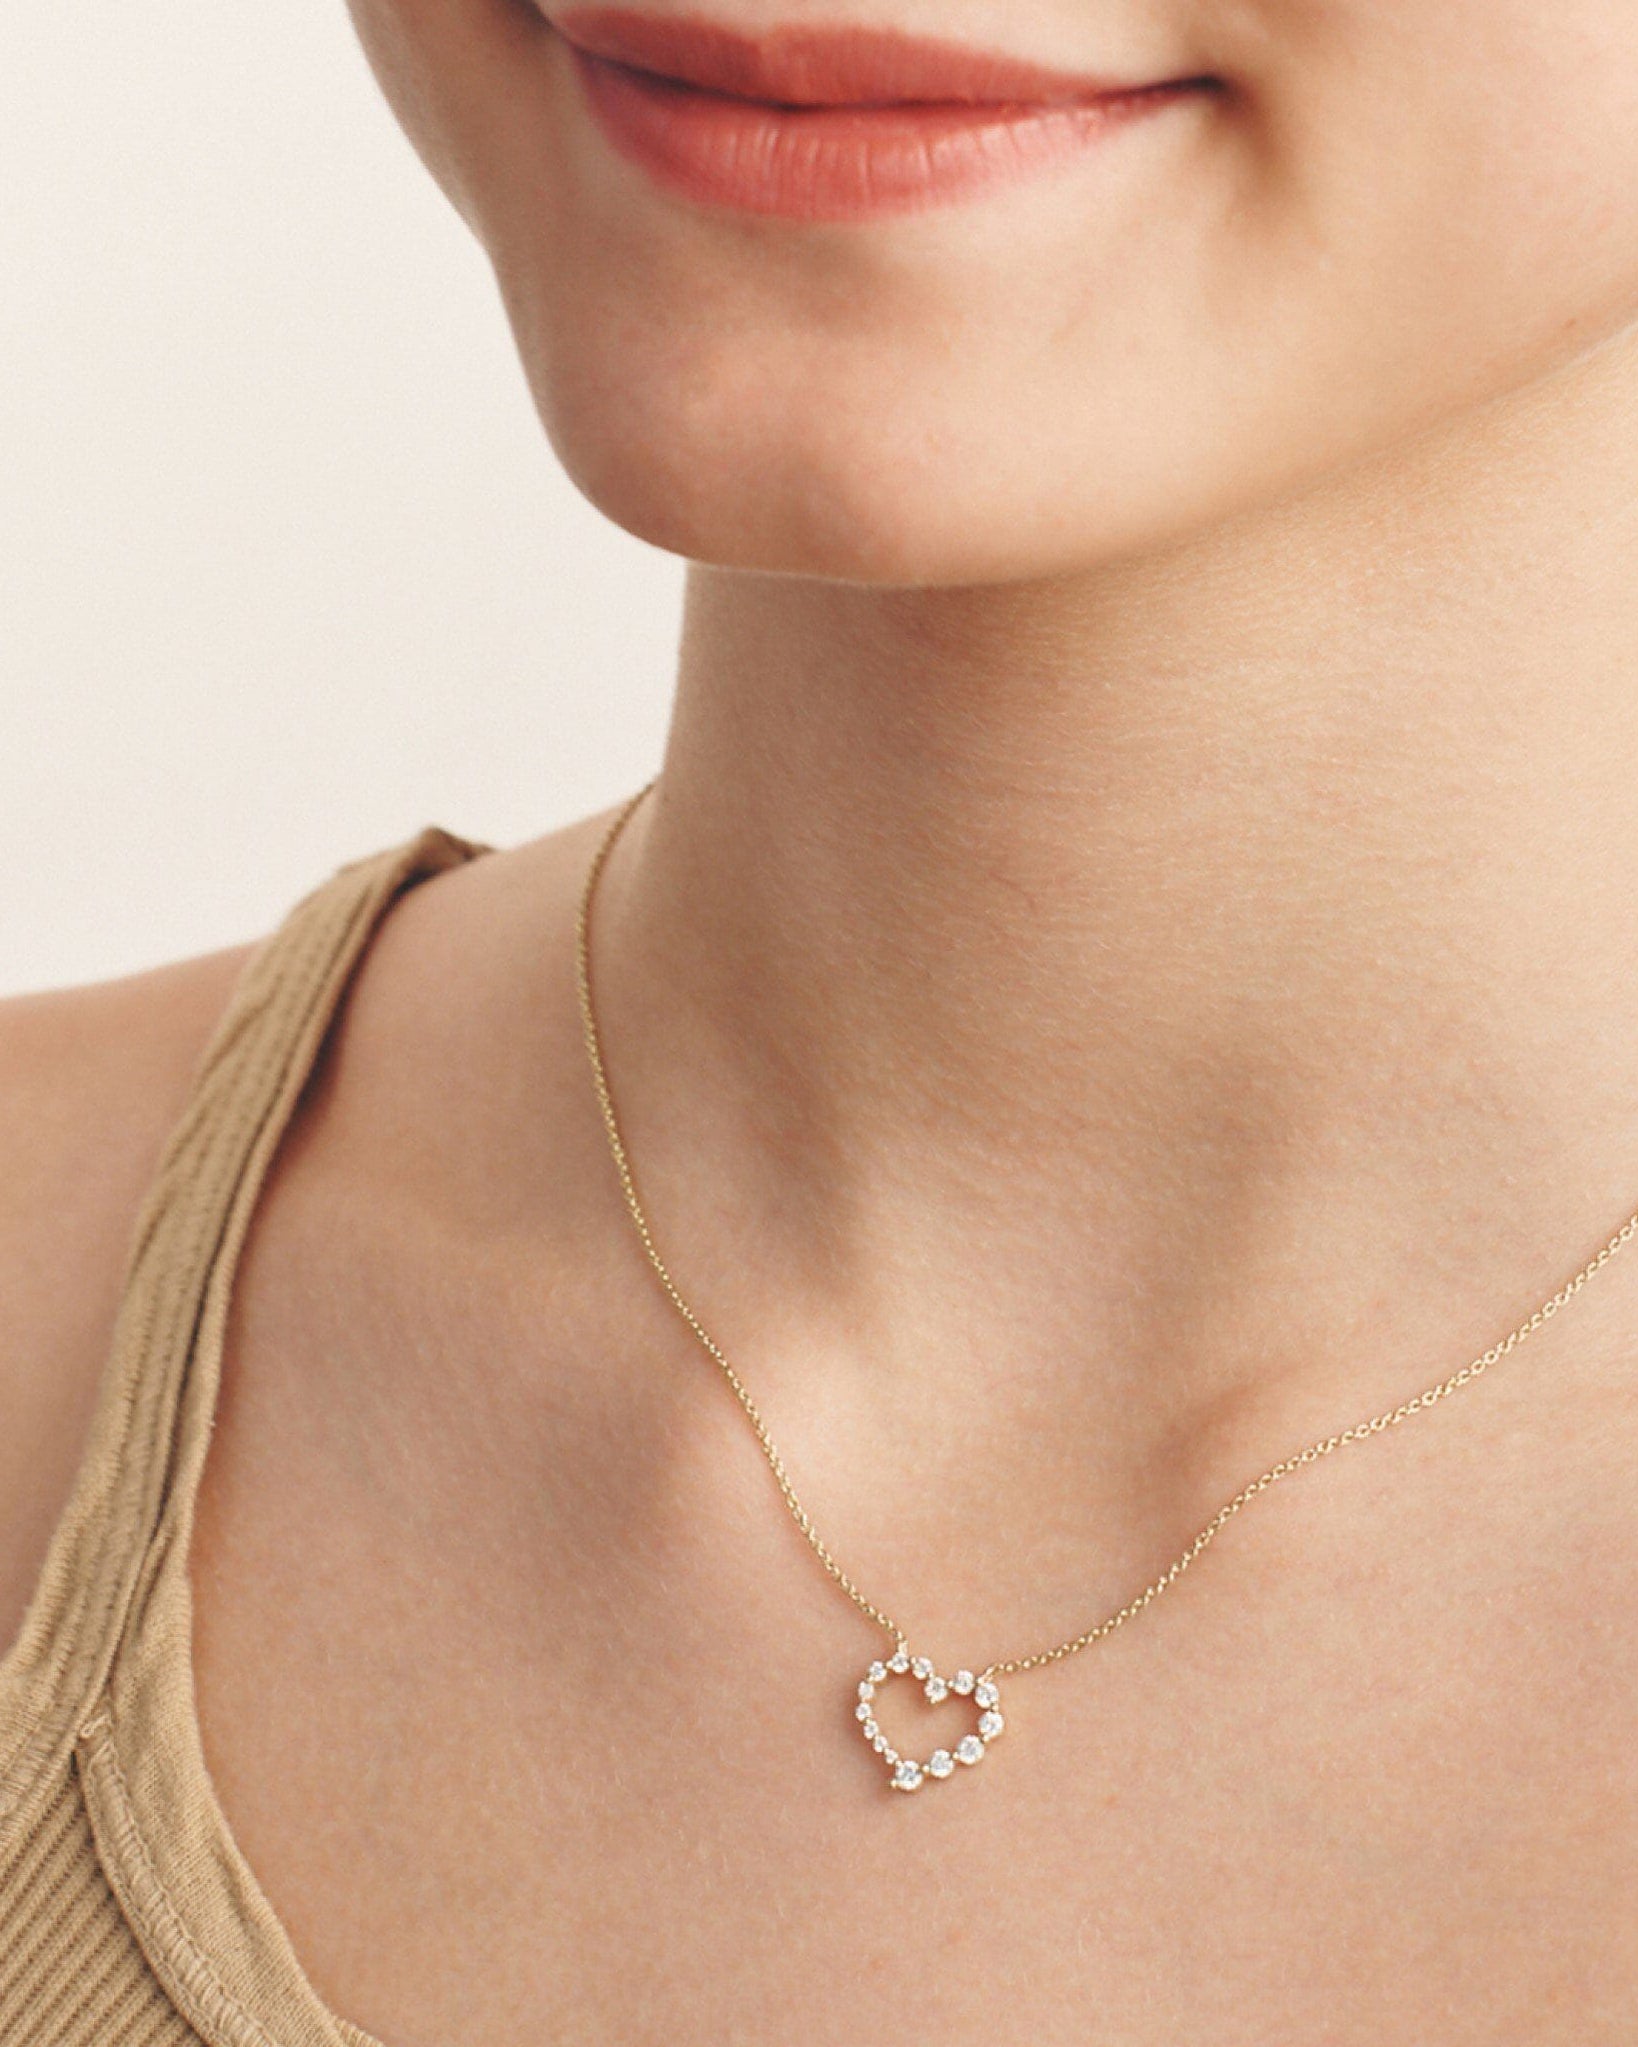 Diamond Heart Pendant - 14K Yellow Gold Necklaces magal-dev 